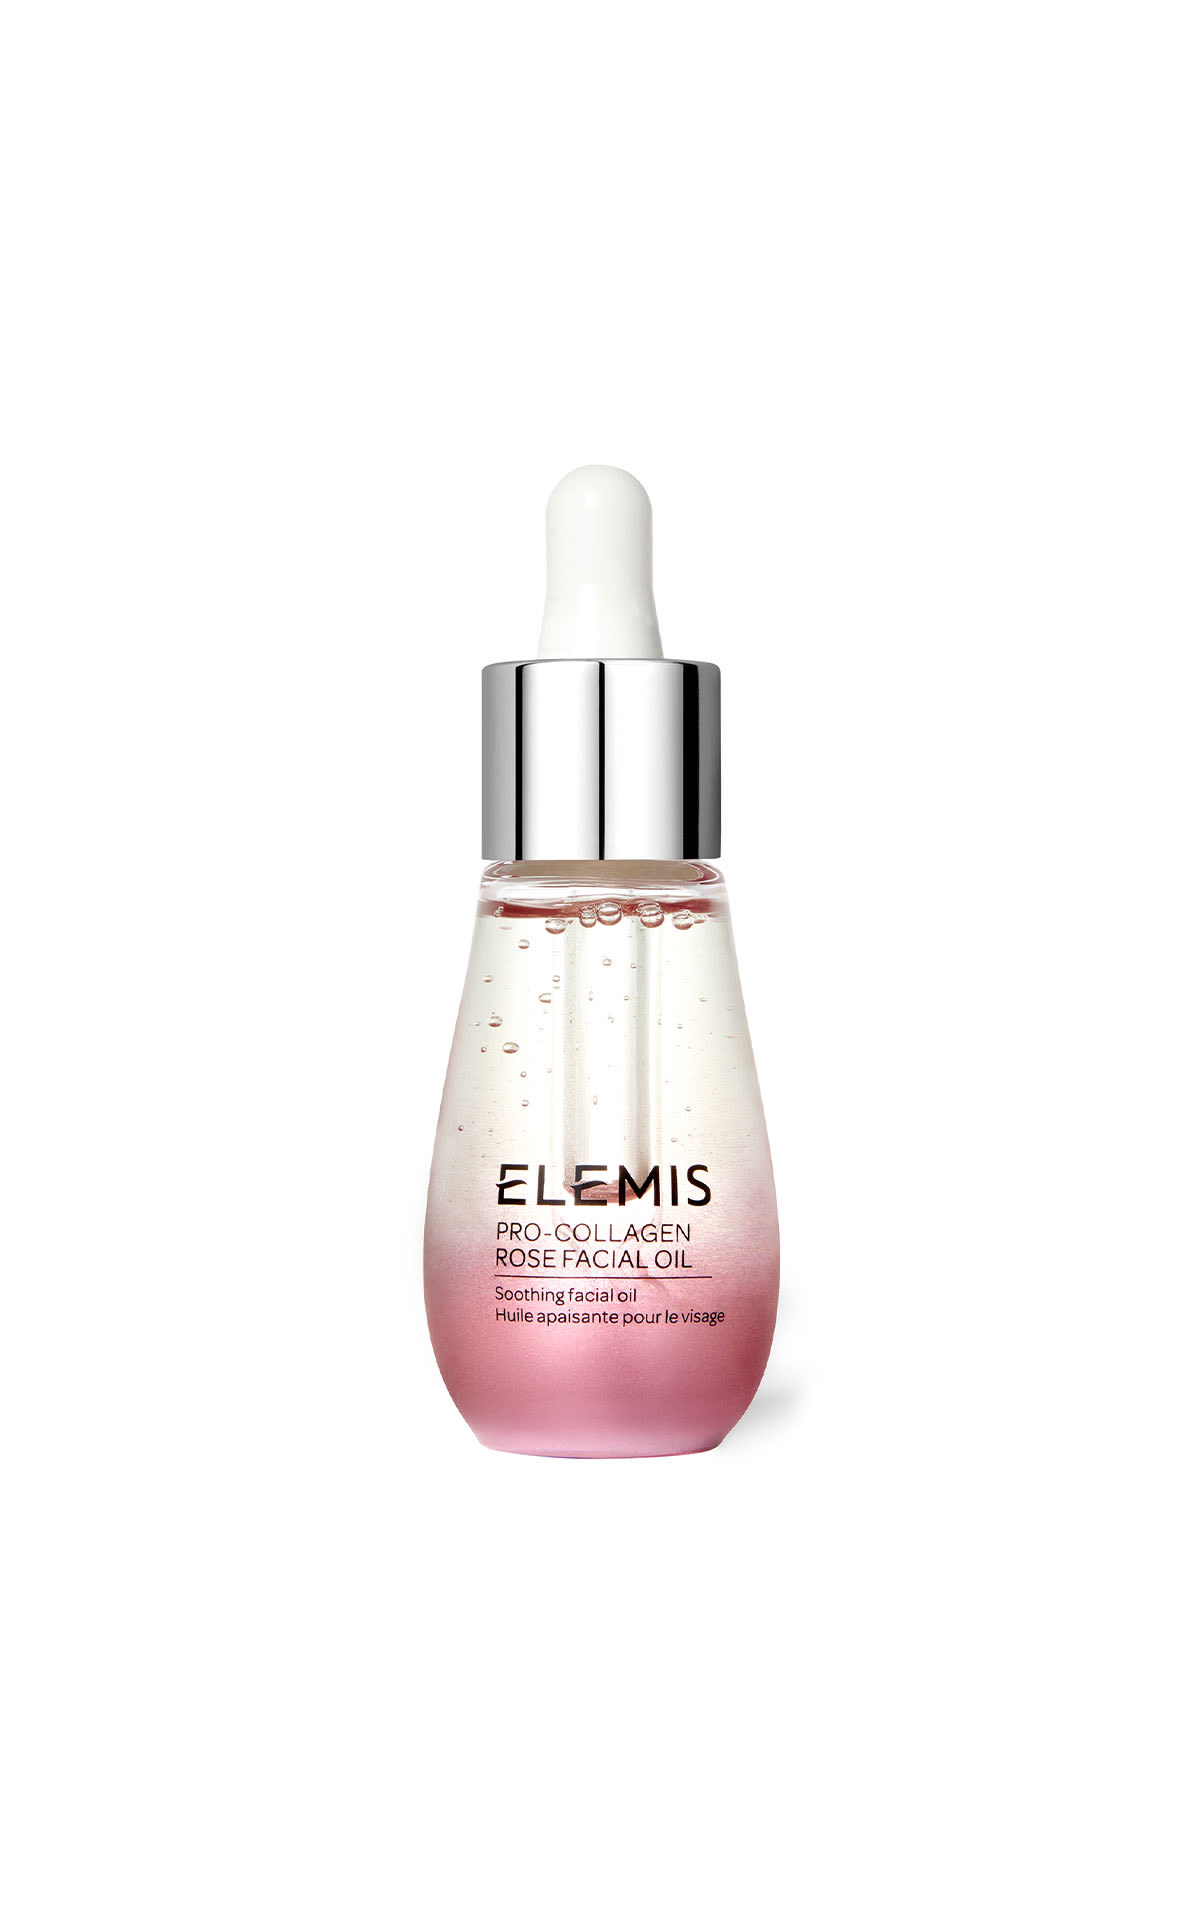 ELEMIS Pro-Collegen rose facial oil 15ml from Bicester Village